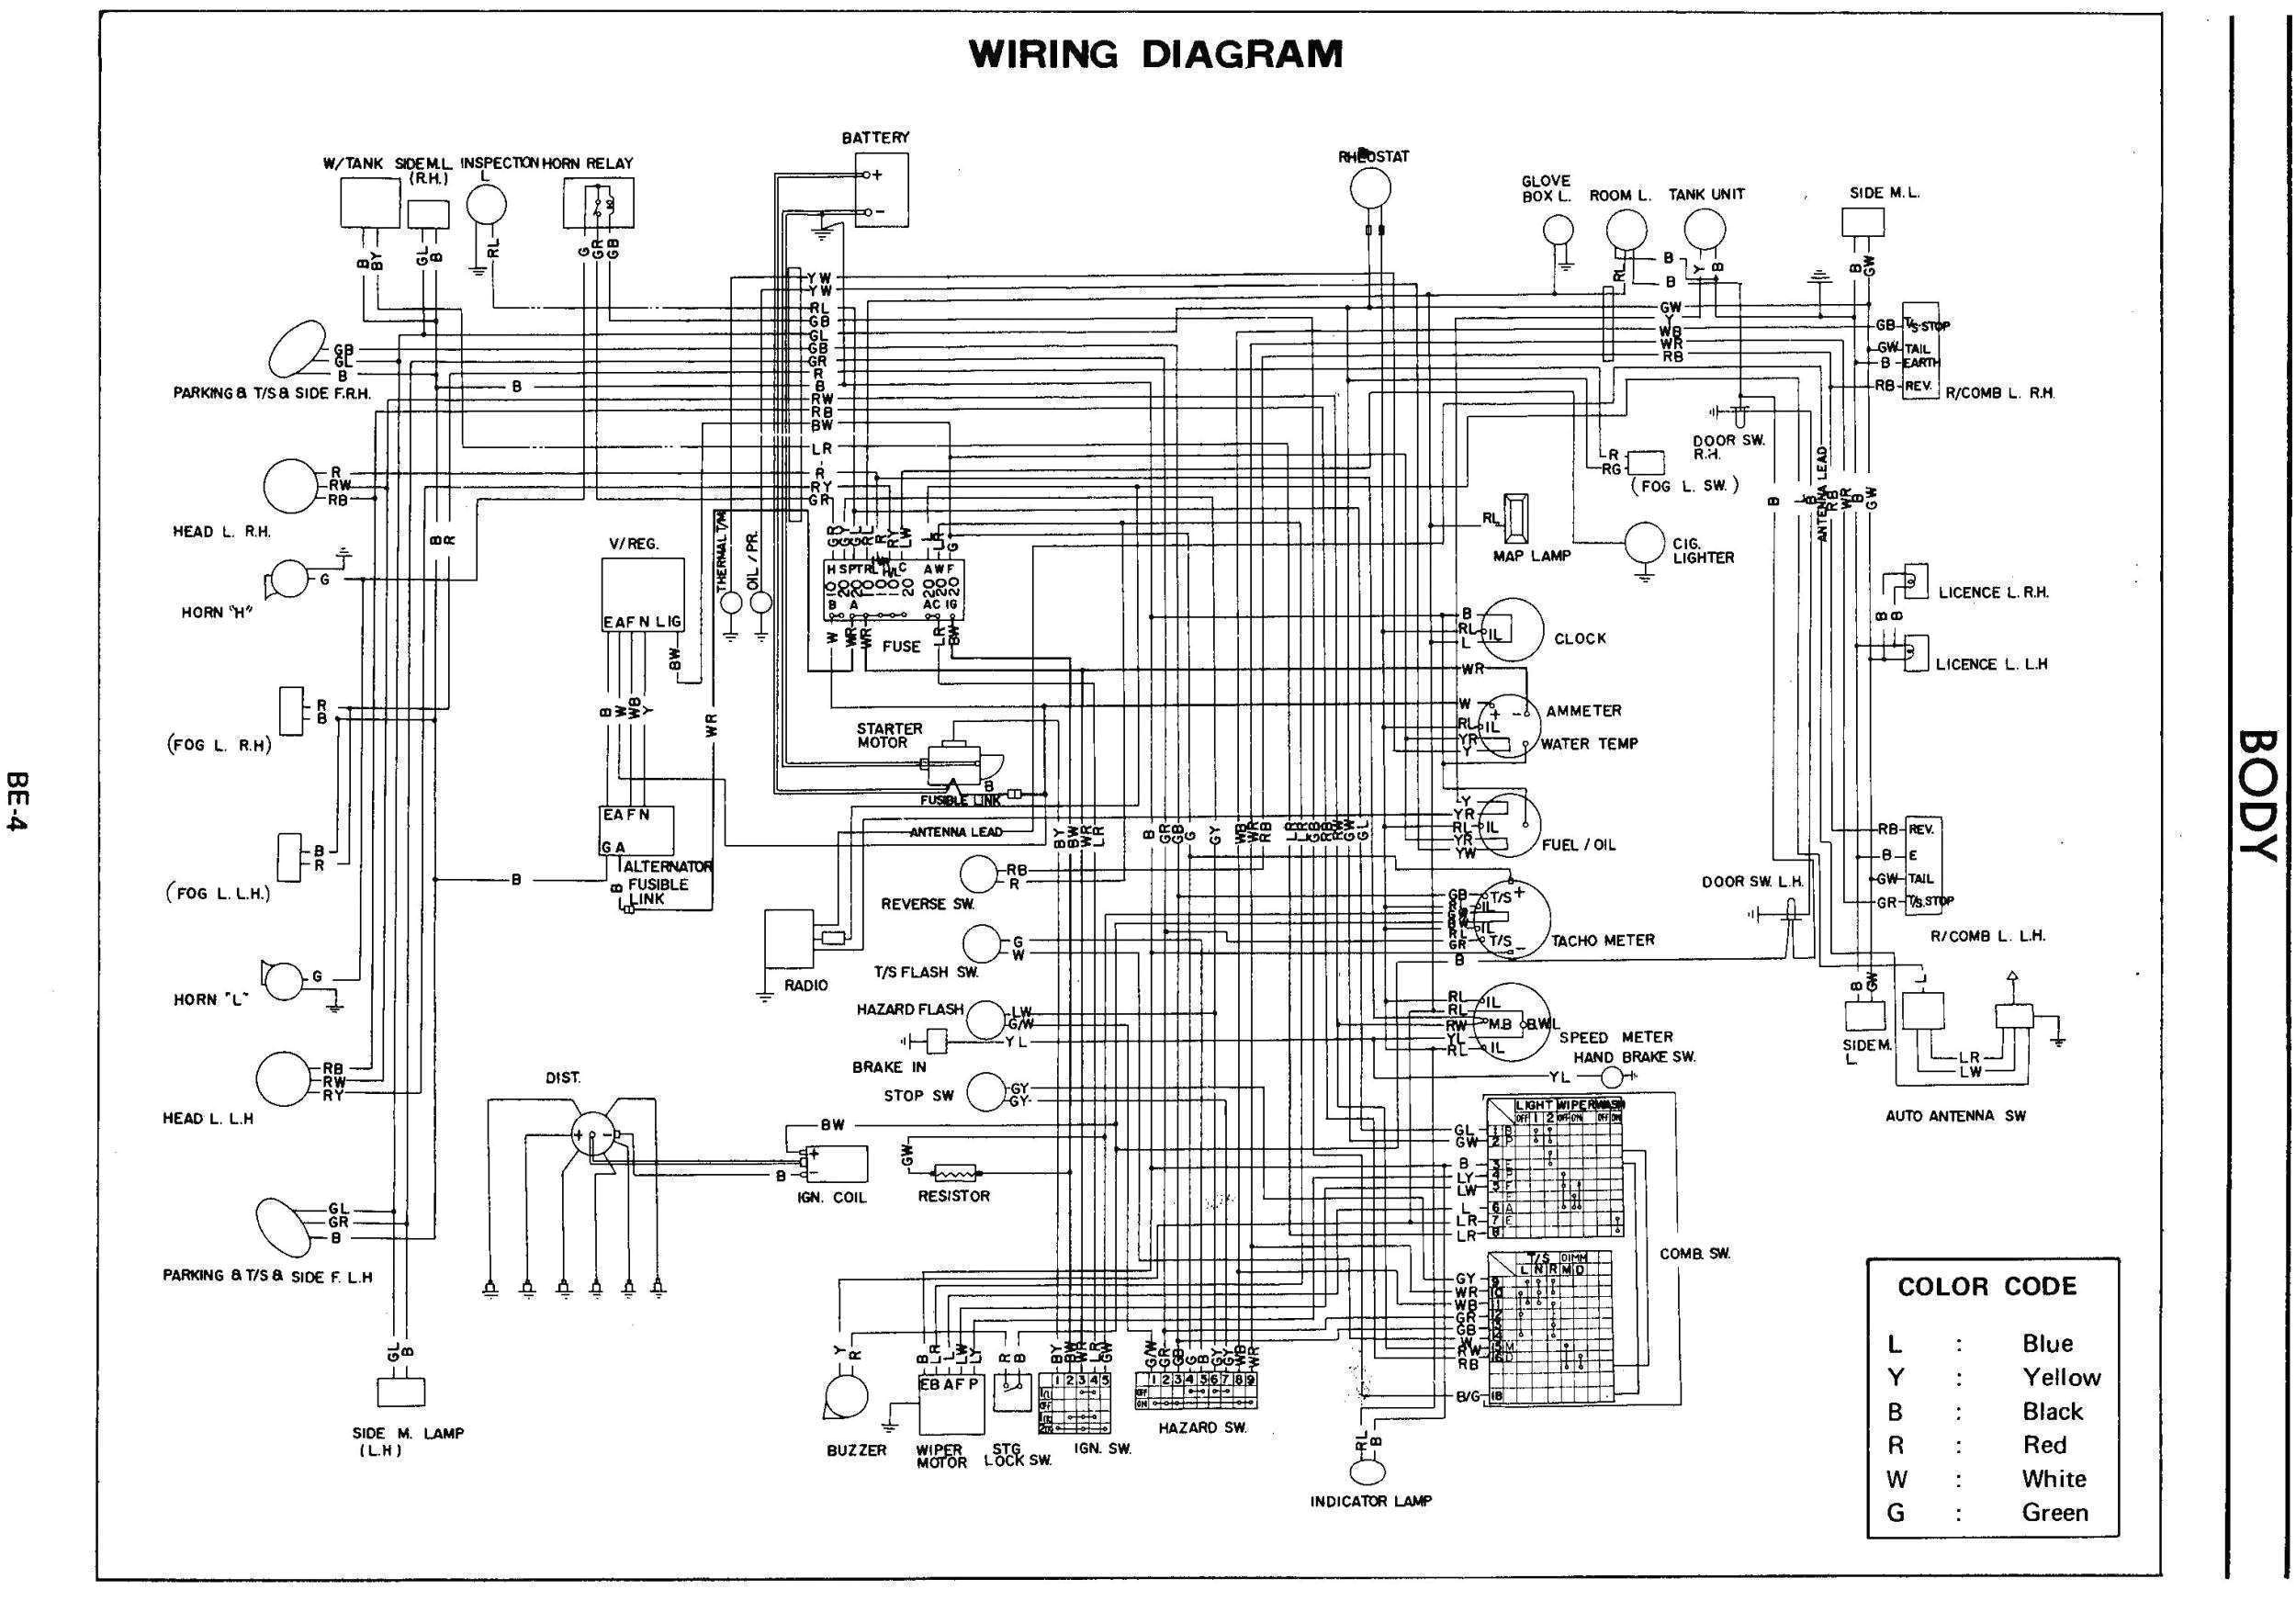 mercedes sprinter wiring diagram pdf mercedes benz wiring diagrams free luxury fantastic s13 wiring rh thespartanchronicle 2n jpg